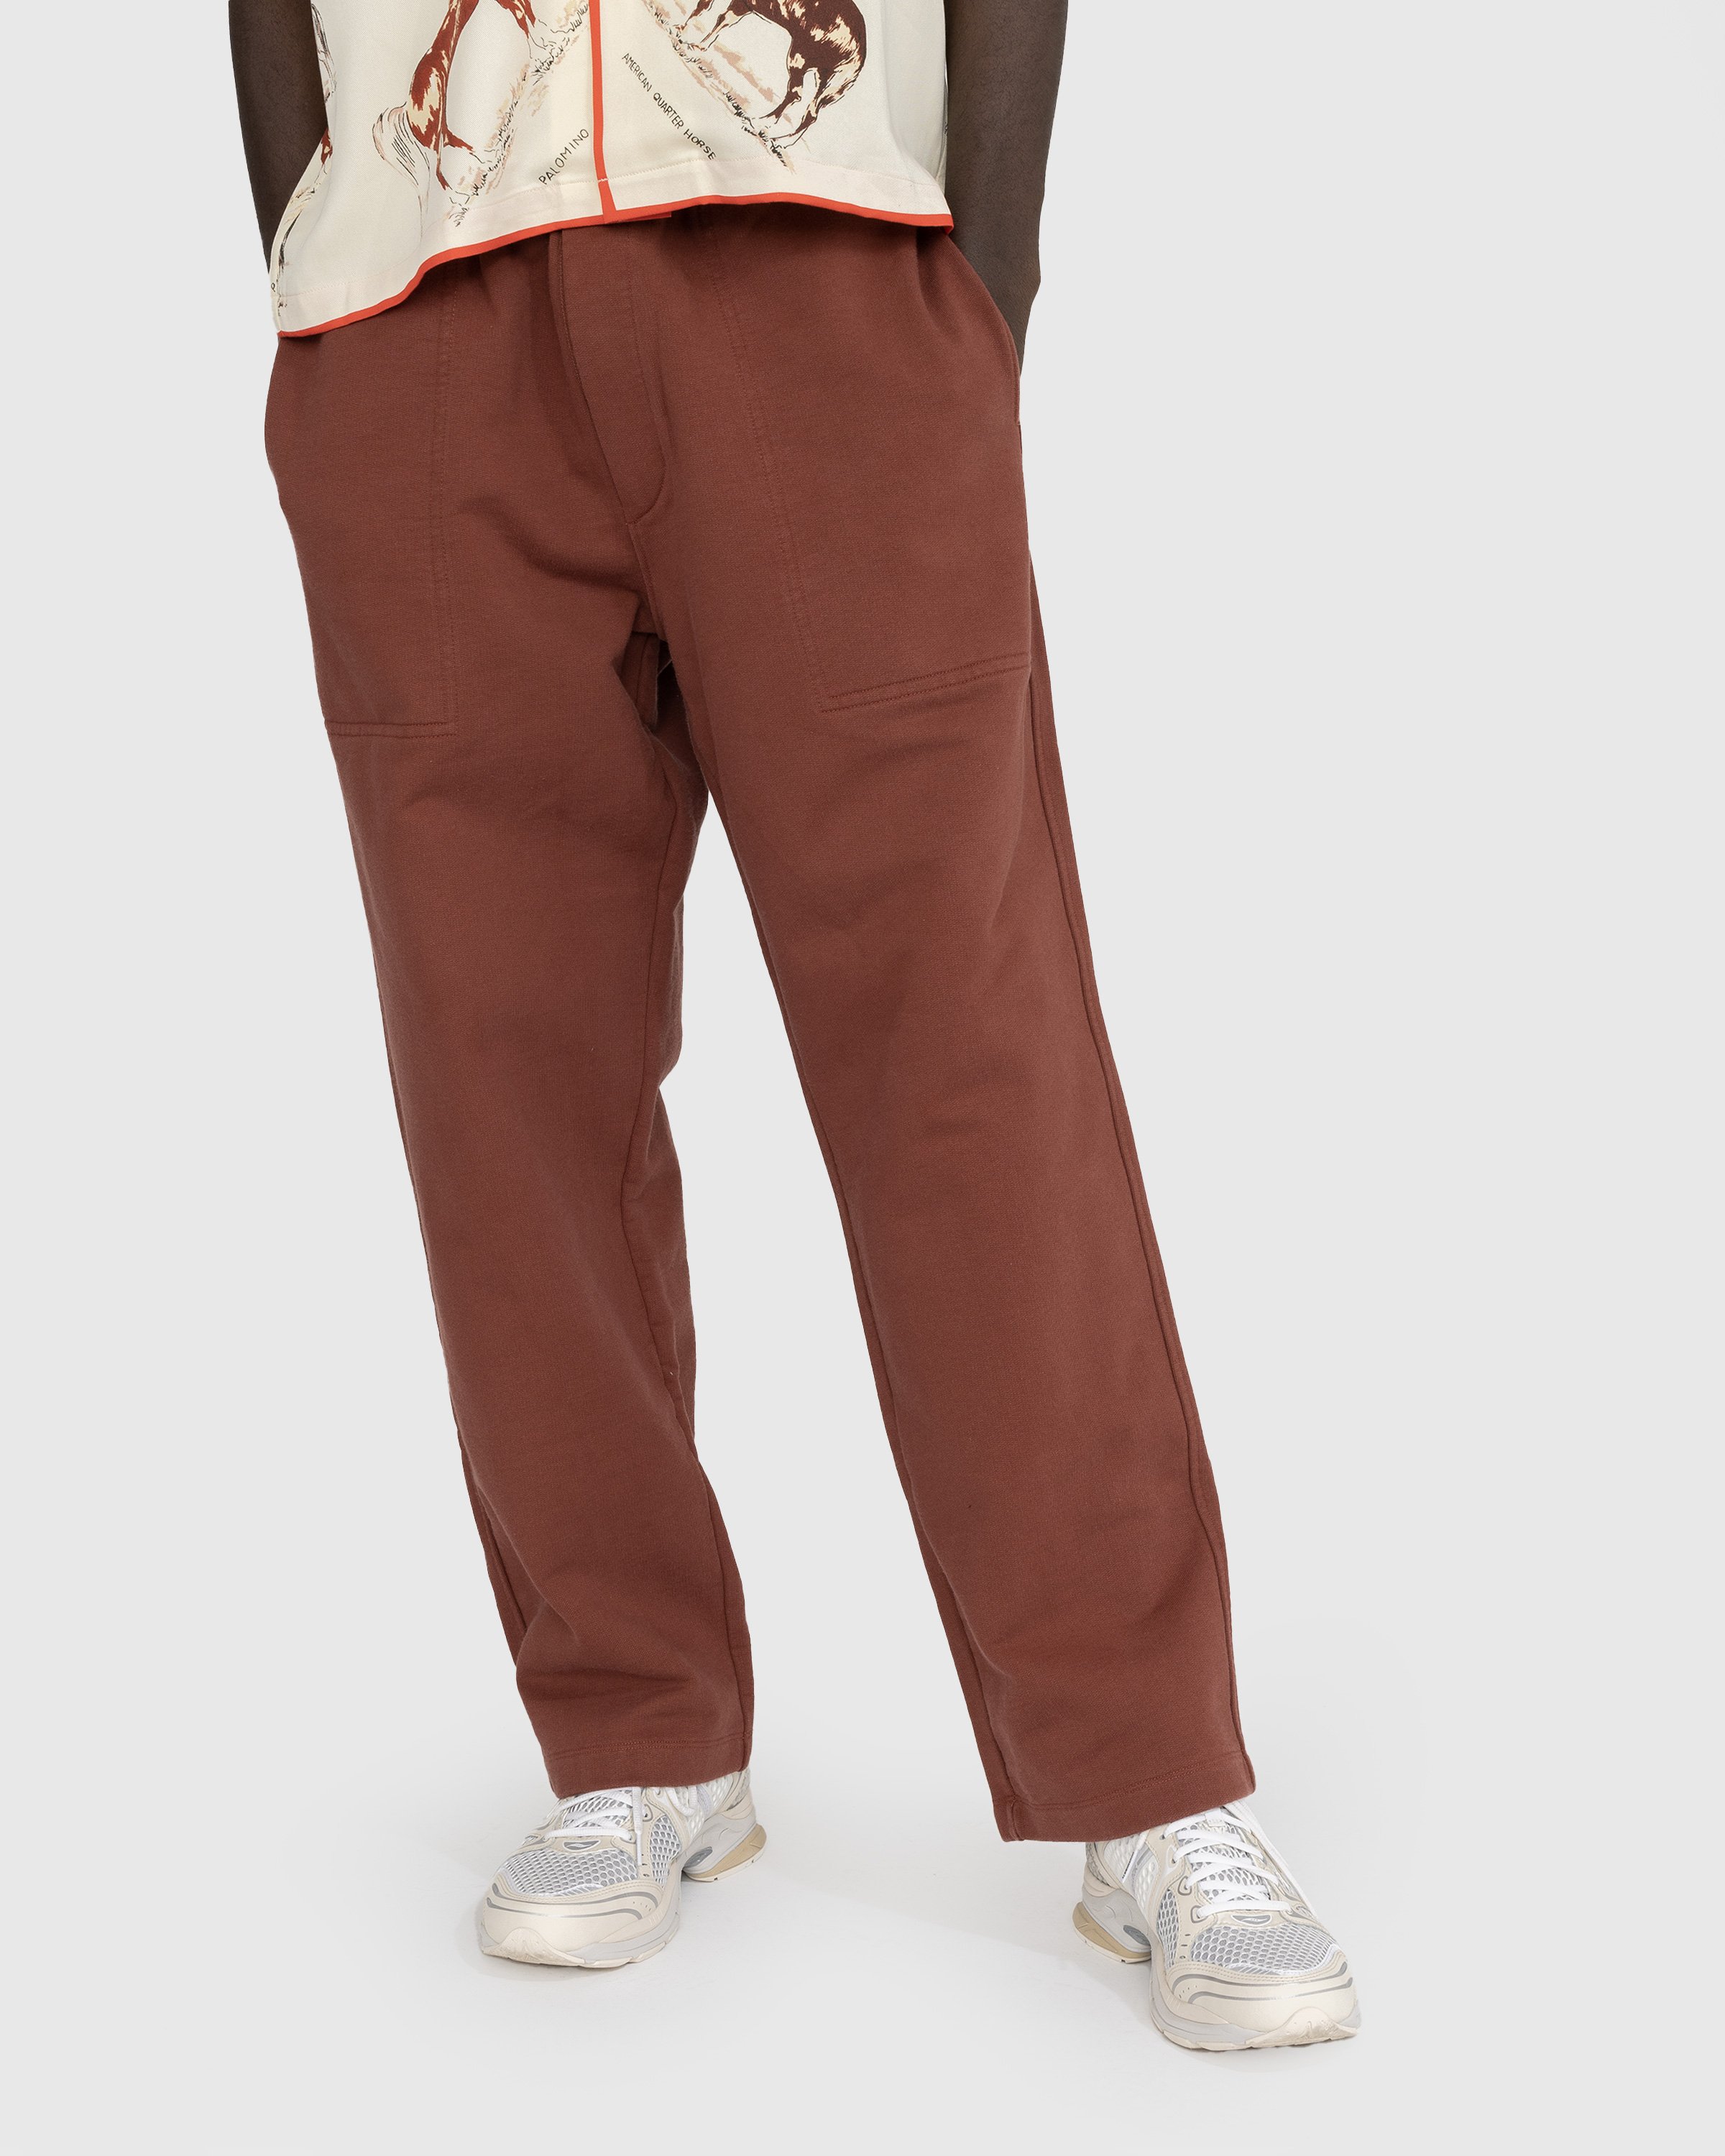 Bode - Sweatpant - Clothing - Brown - Image 2